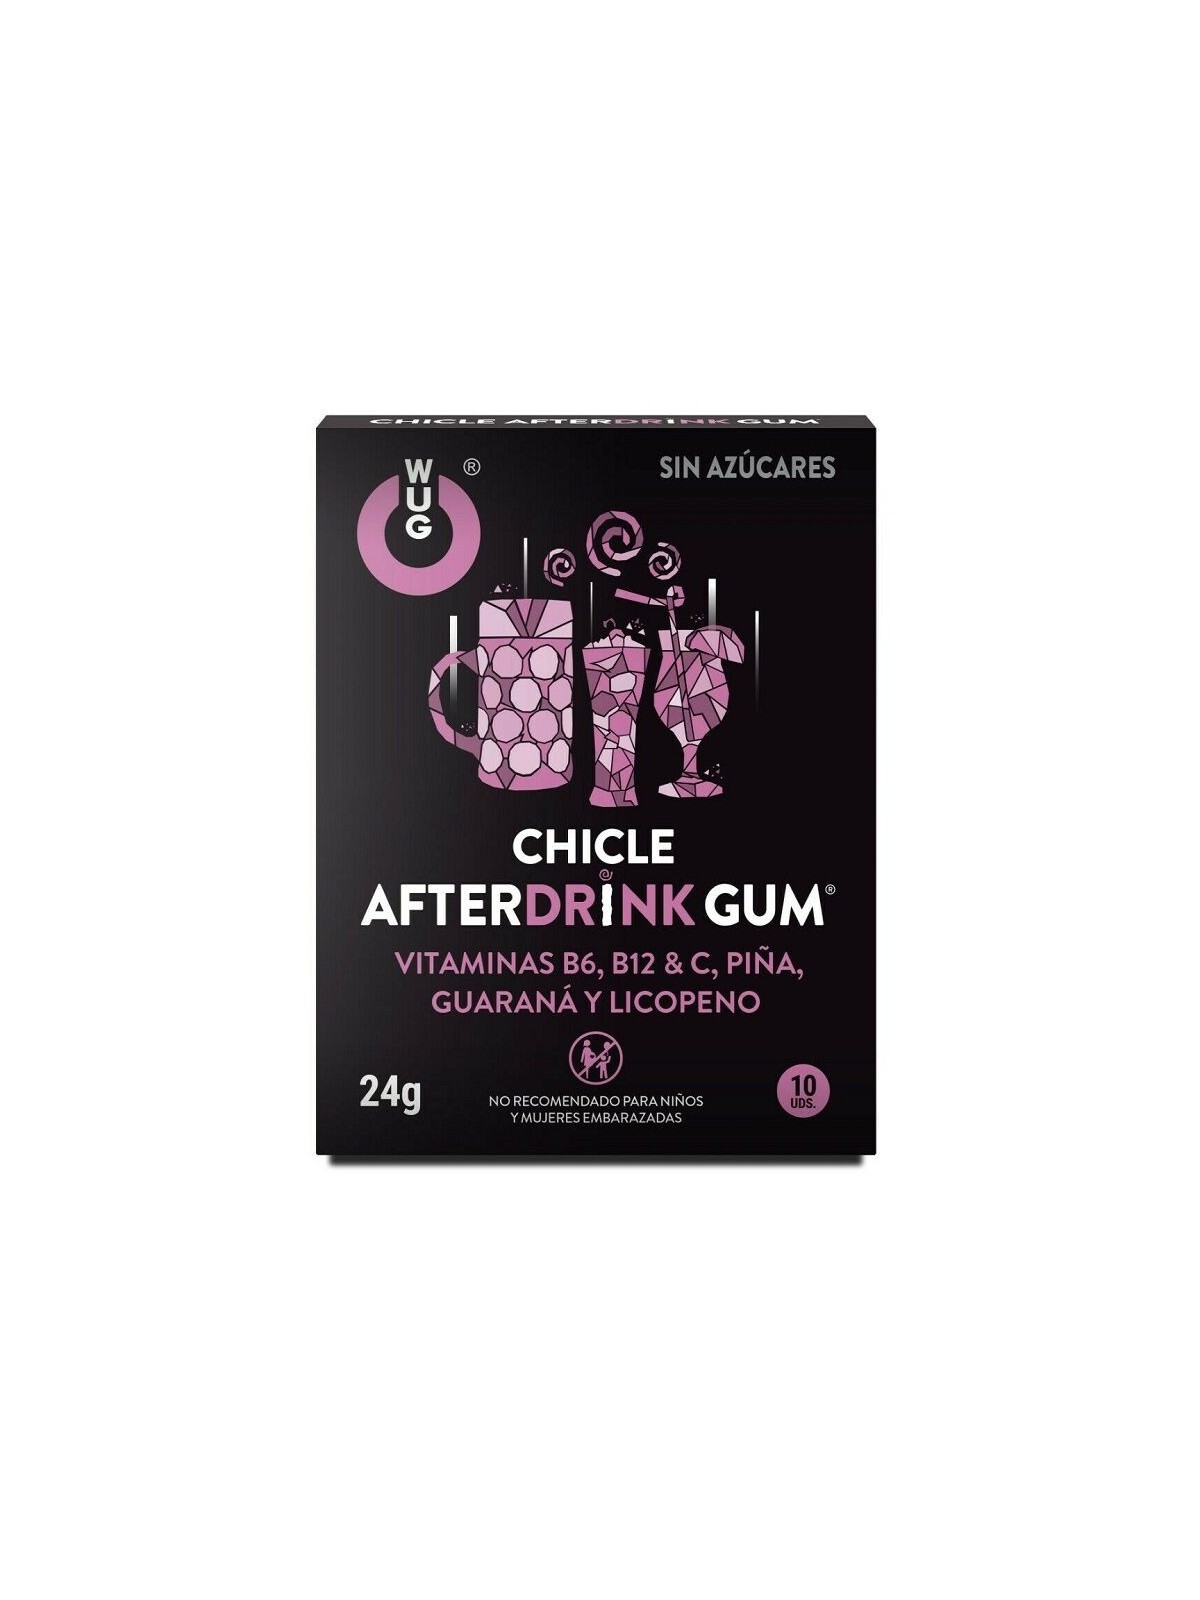 Wug Gum Chicle After Drink 10 uds - Comprar Chucherías eróticas Wug - Chucherías eróticas (1)